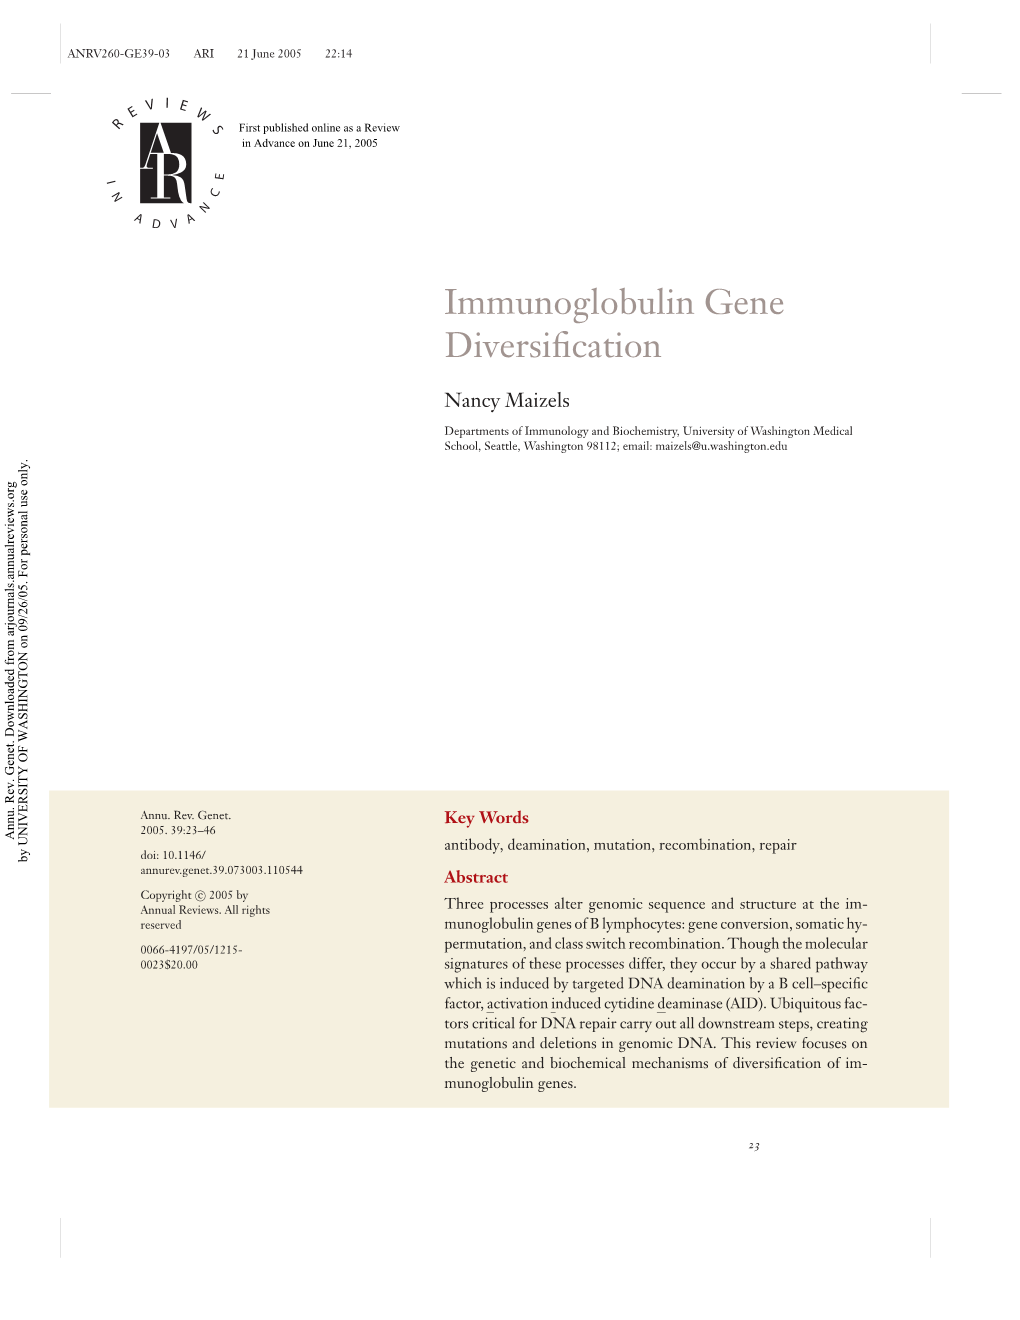 Immunoglobulin Gene Diversification